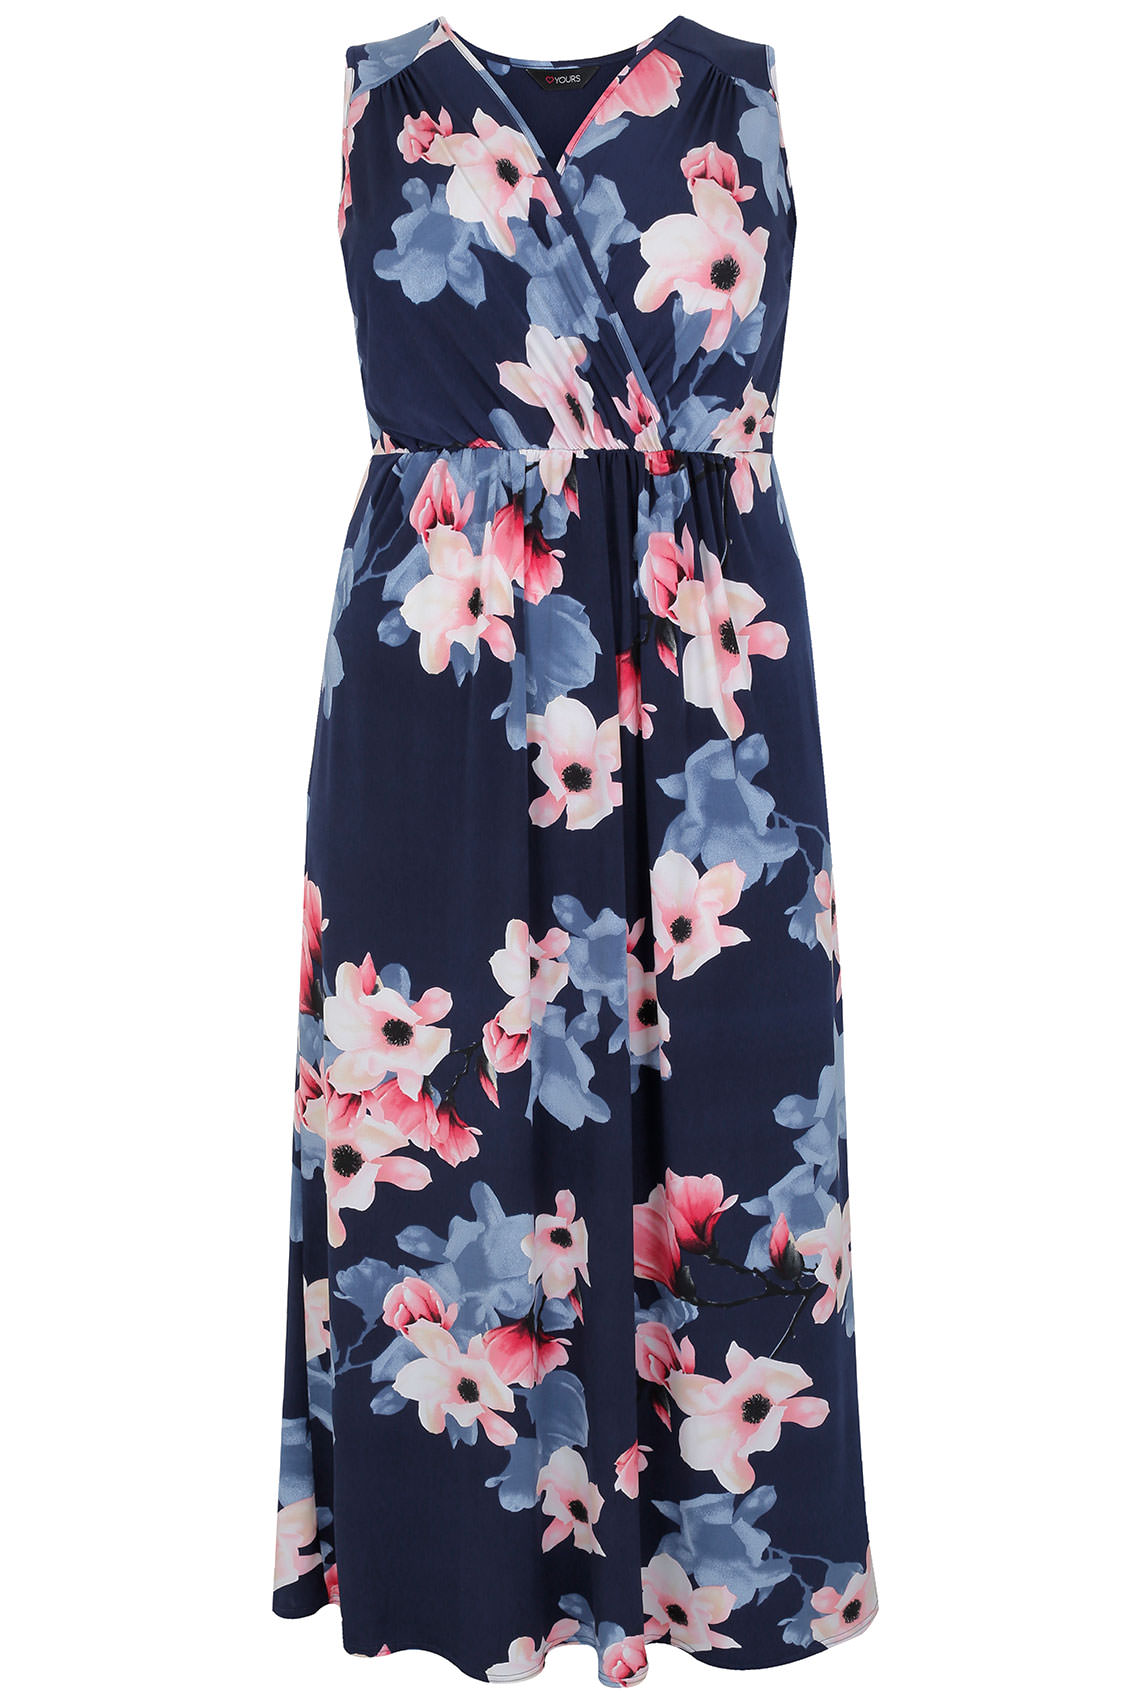 Navy & Multi Floral Print Wrap Maxi Dress, Plus size 16 to 36